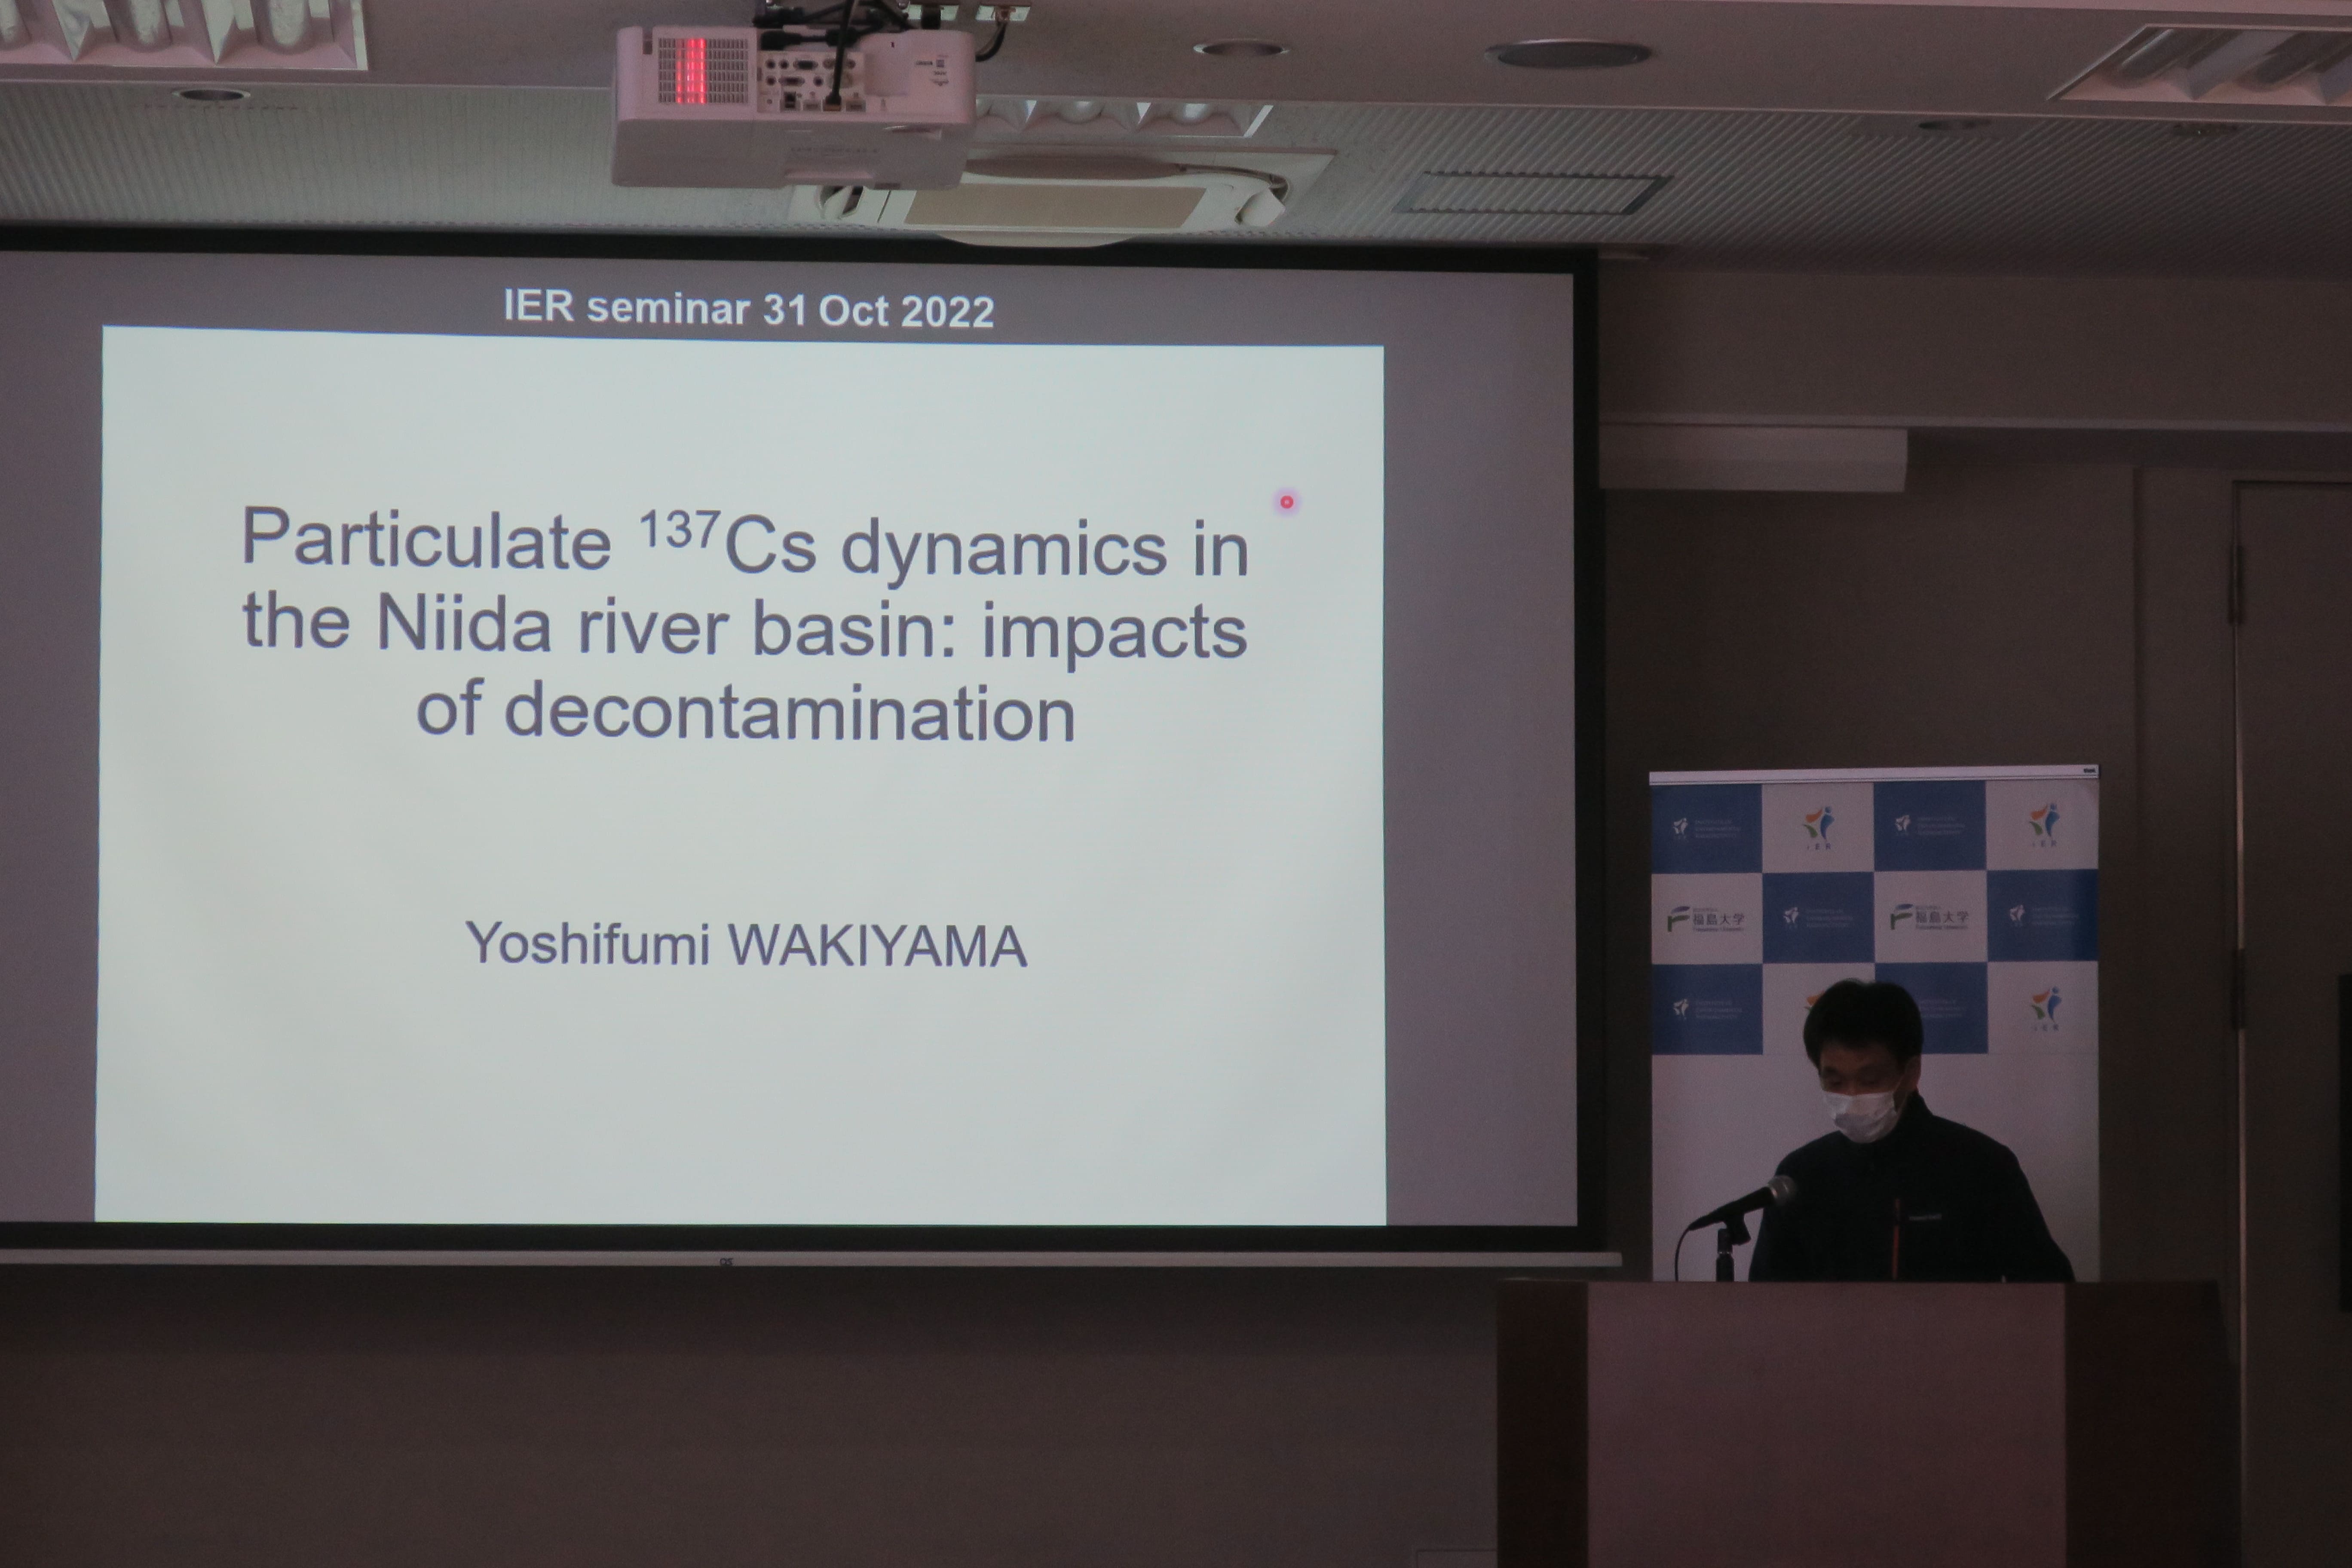 WAKIYAMA Yoshifumi, Associate Professor